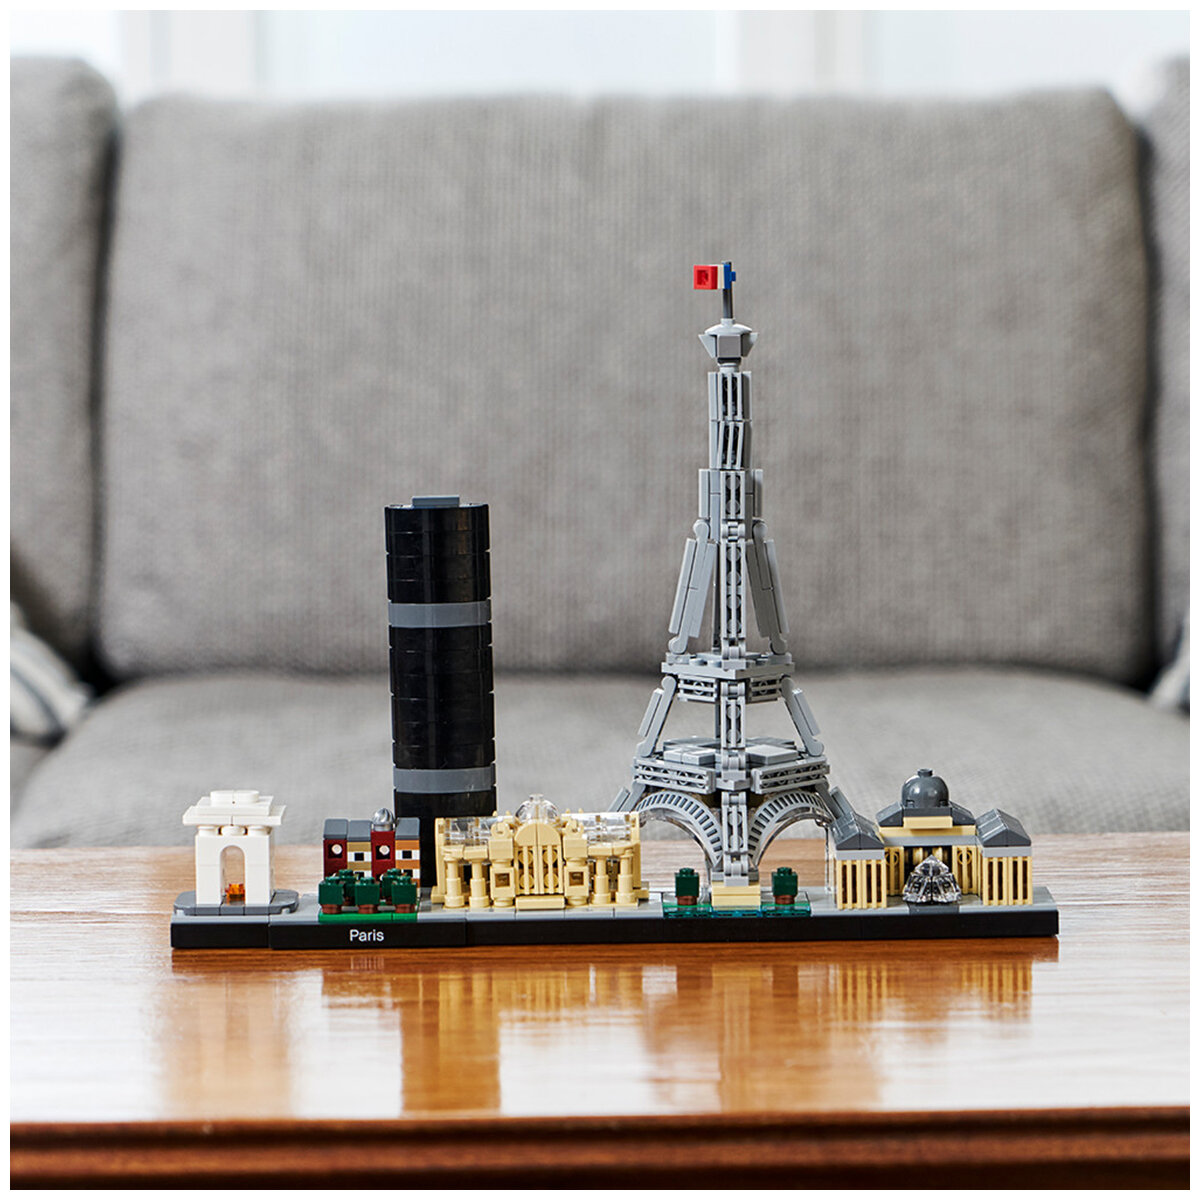 LEGO Skyline Collection Paris 21044